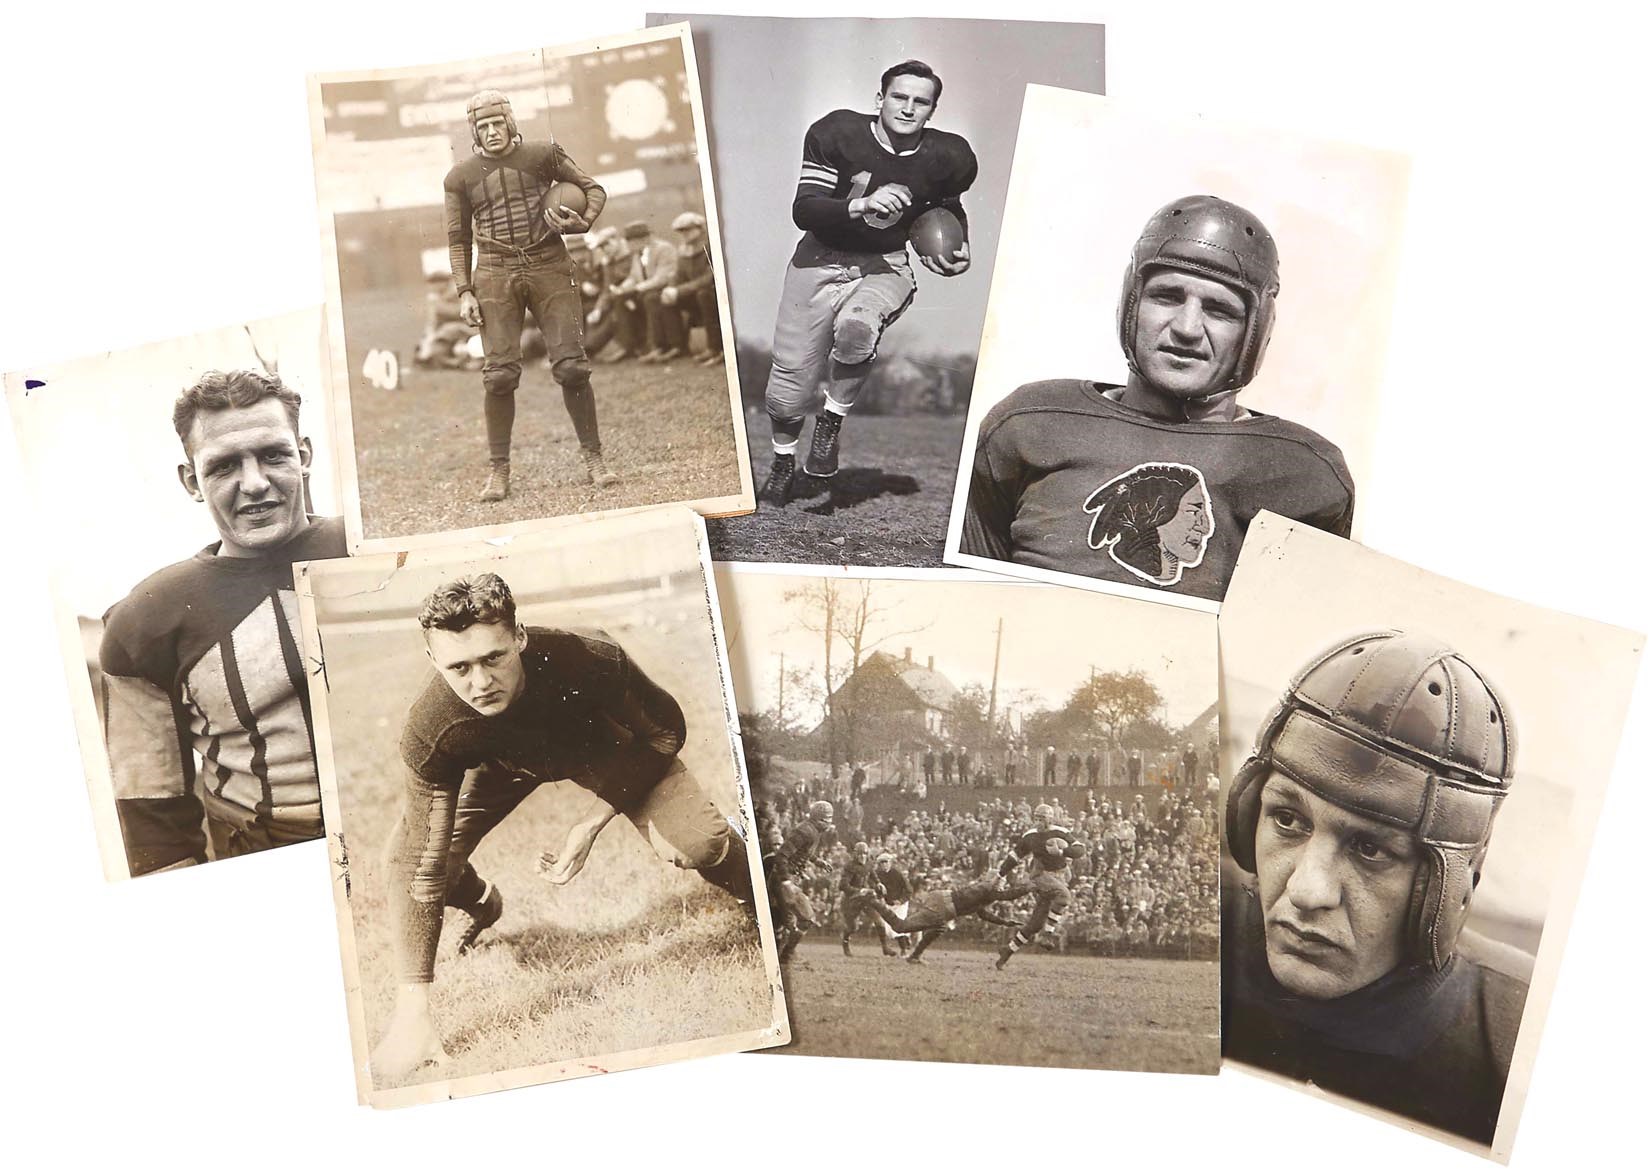 Vintage Sports Photographs - Exceptional Football Vintage Photographs (7)